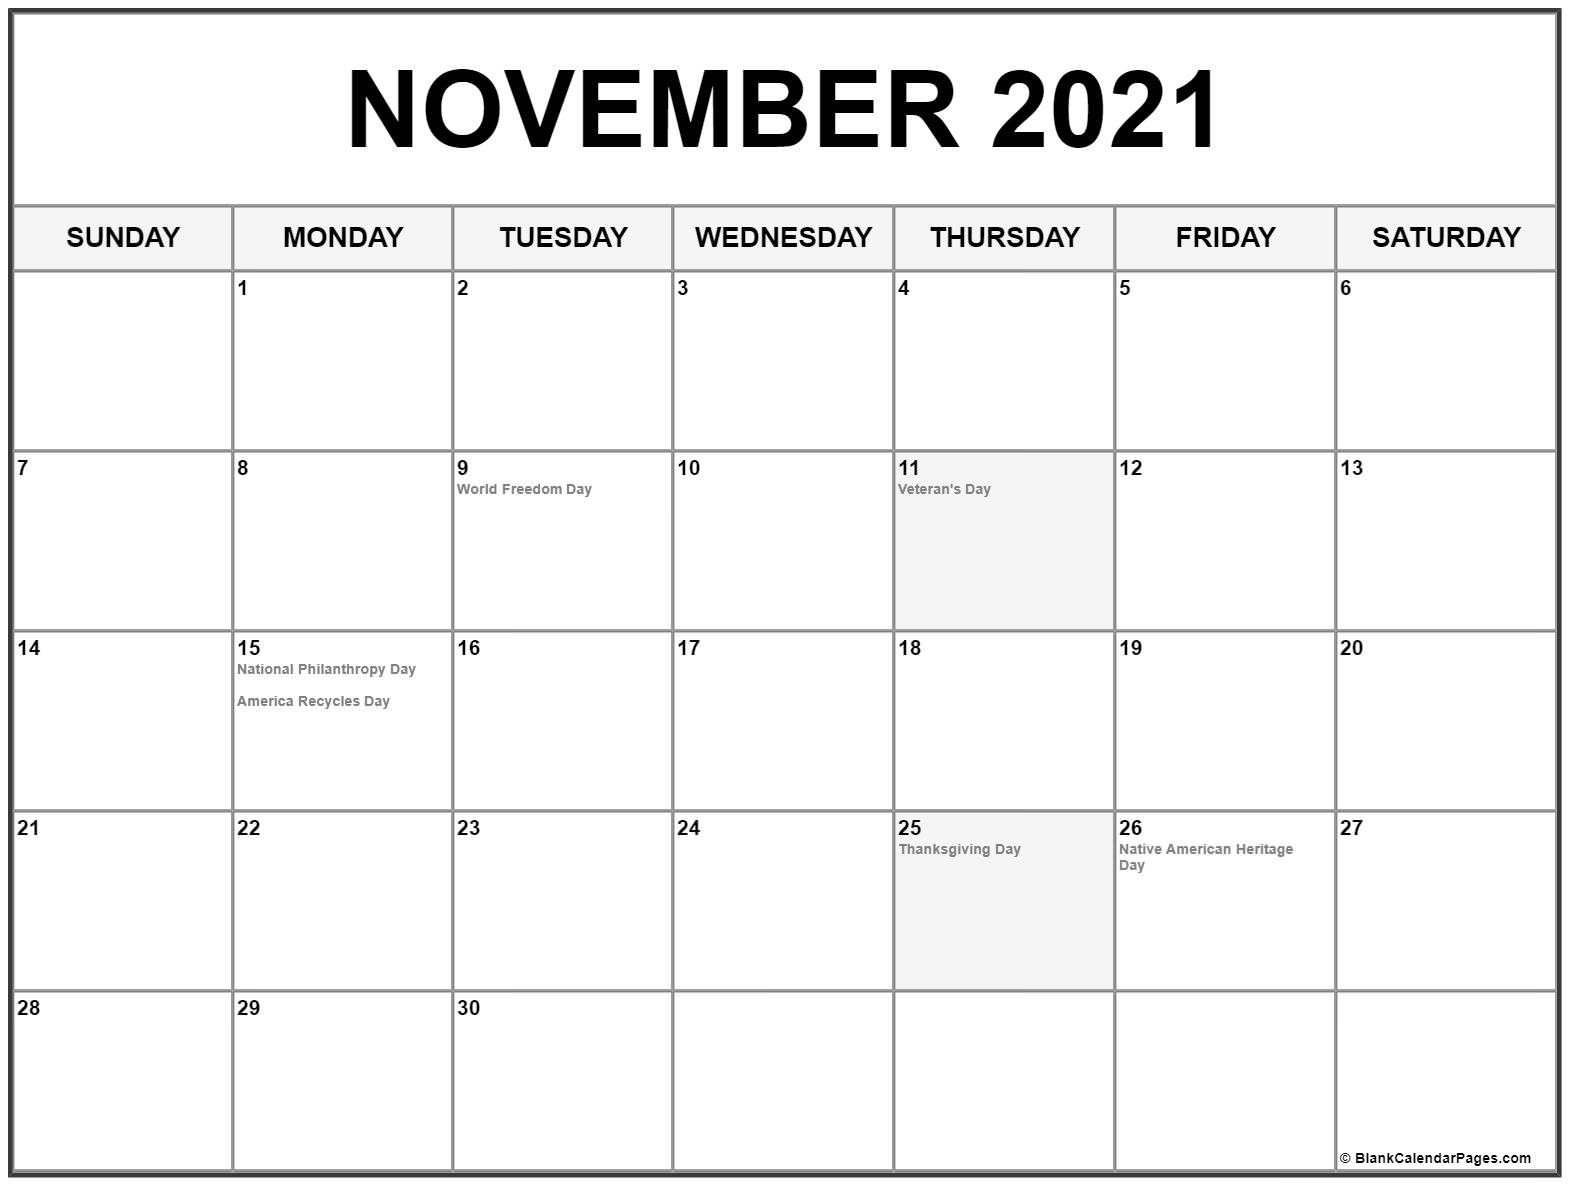 When Is Thanksgiving In 2021 | Get Free Calendar November 2021 In Hijri Calendar